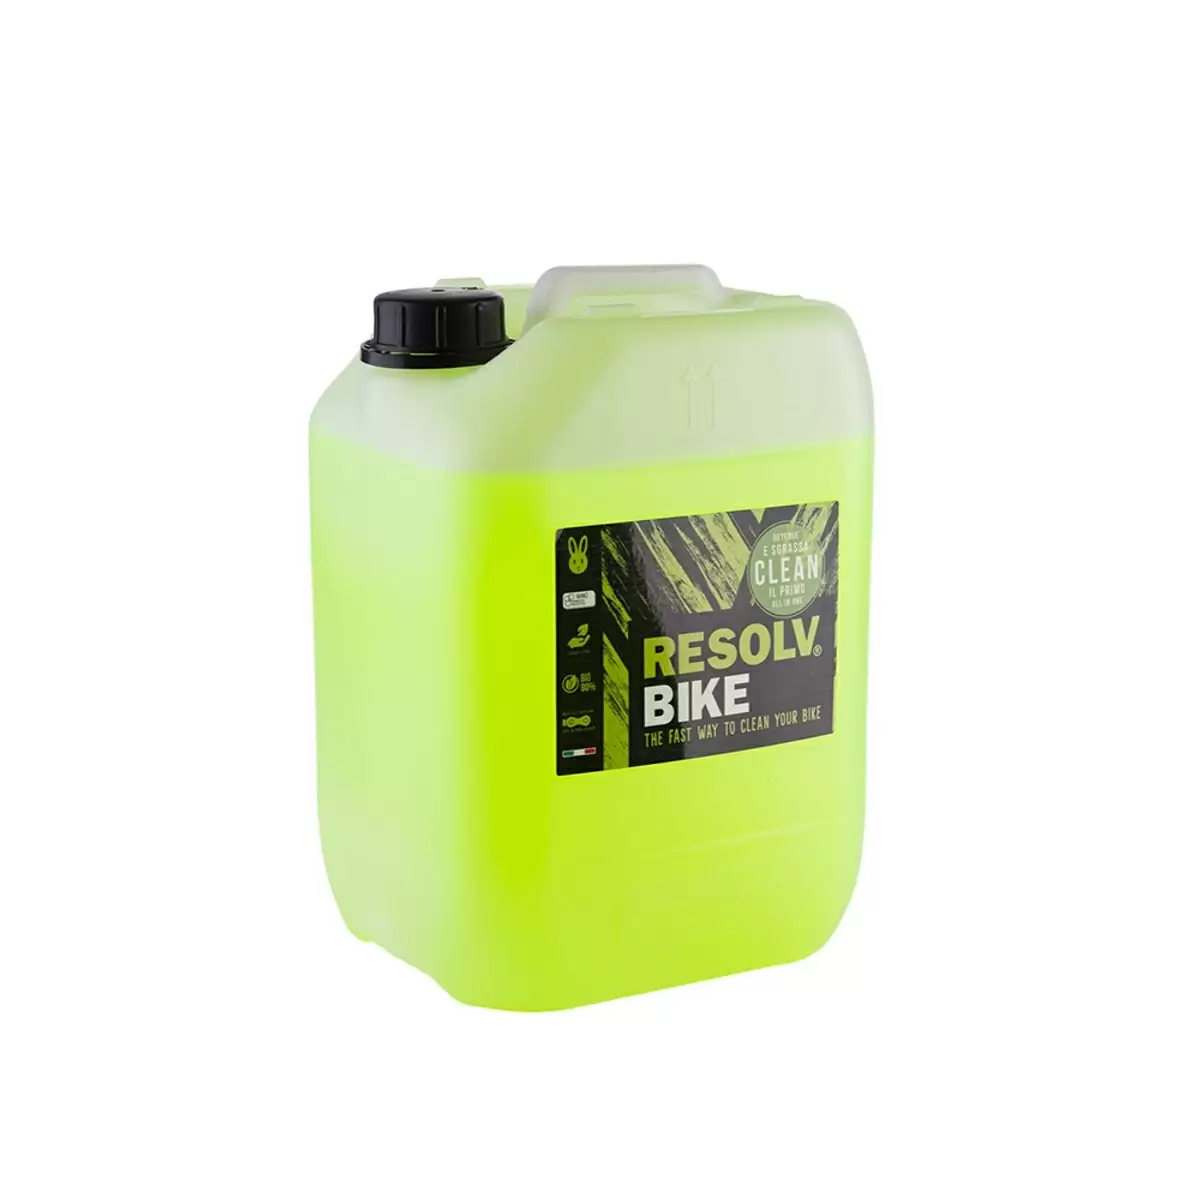 Detergente para limpeza de bicicletas 10L - image